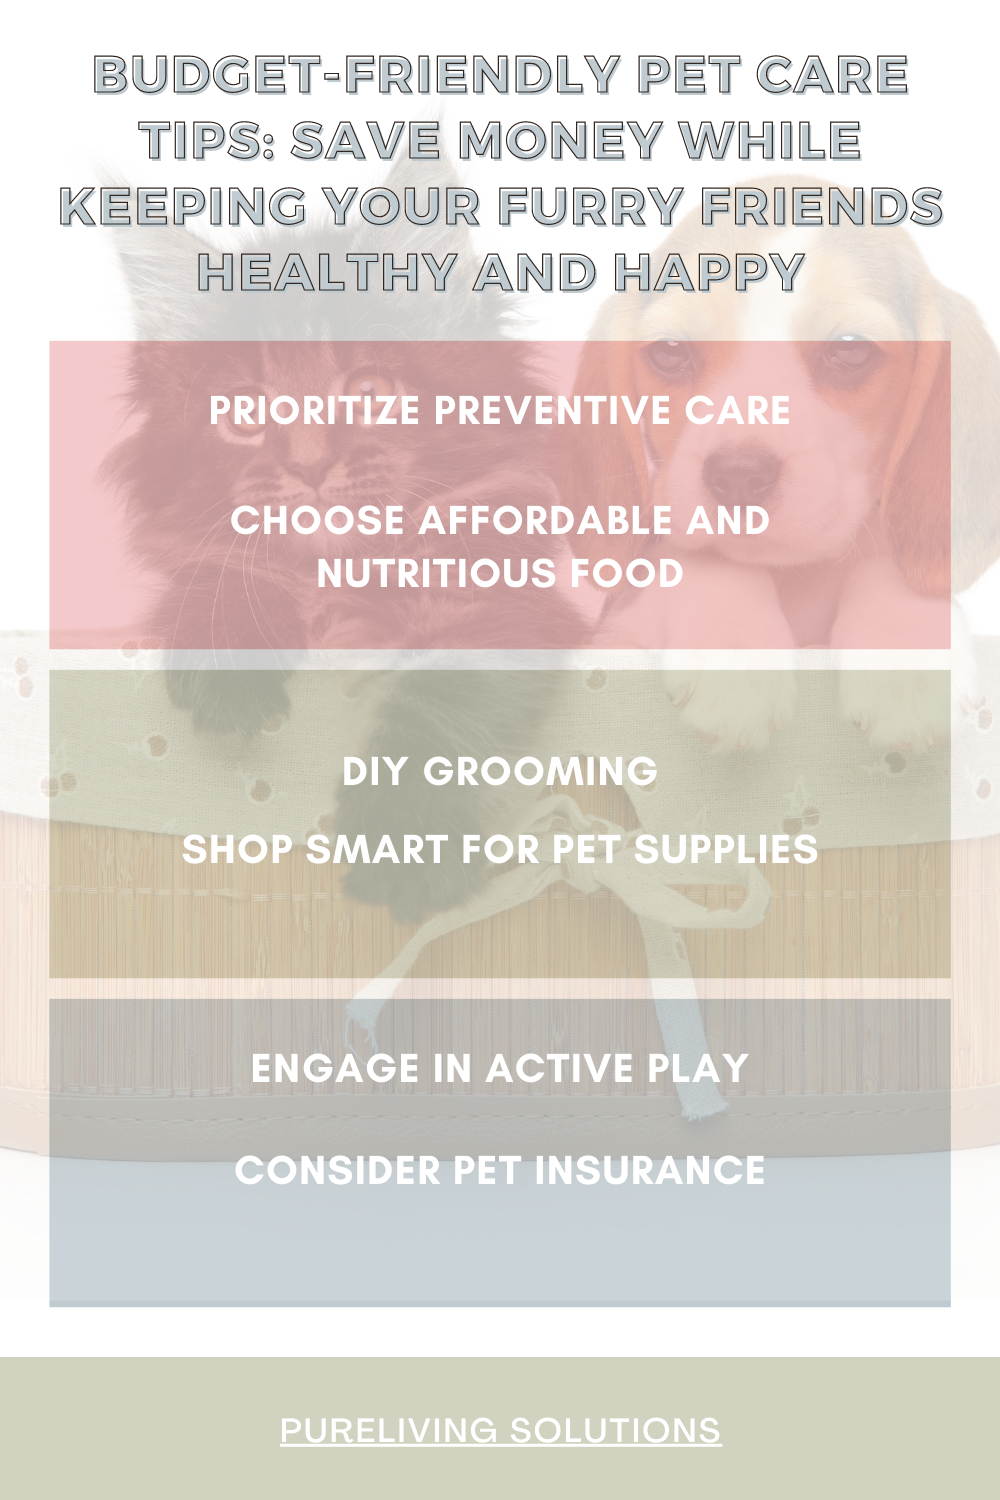 Budget-friendly pet care supplies